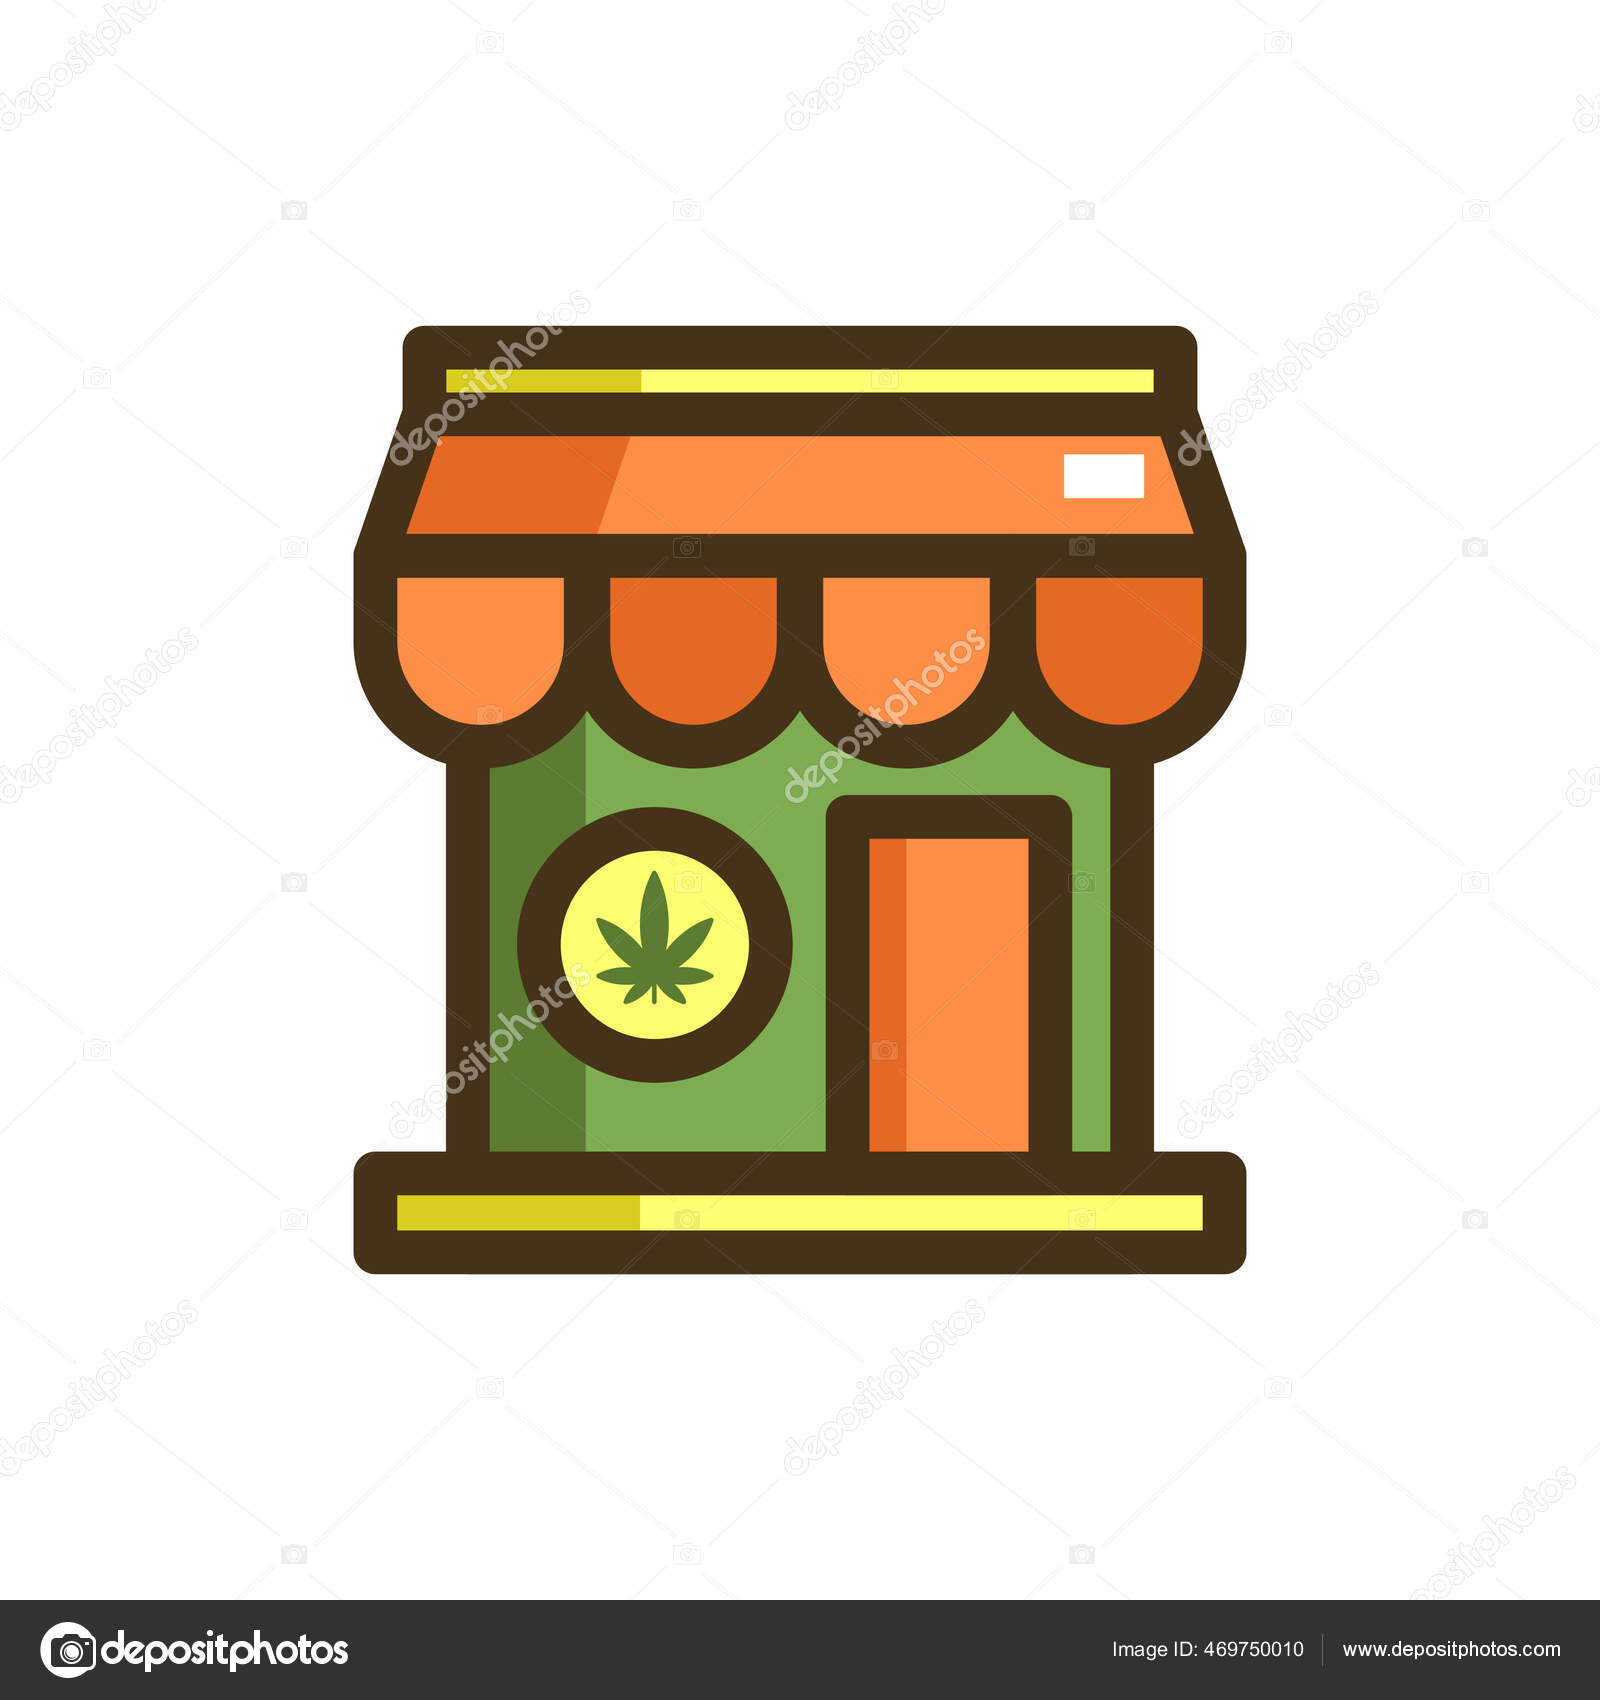 https://st2.depositphotos.com/47577860/46975/v/1600/depositphotos_469750010-stock-illustration-cannabis-marijuana-recreational-icon.jpg